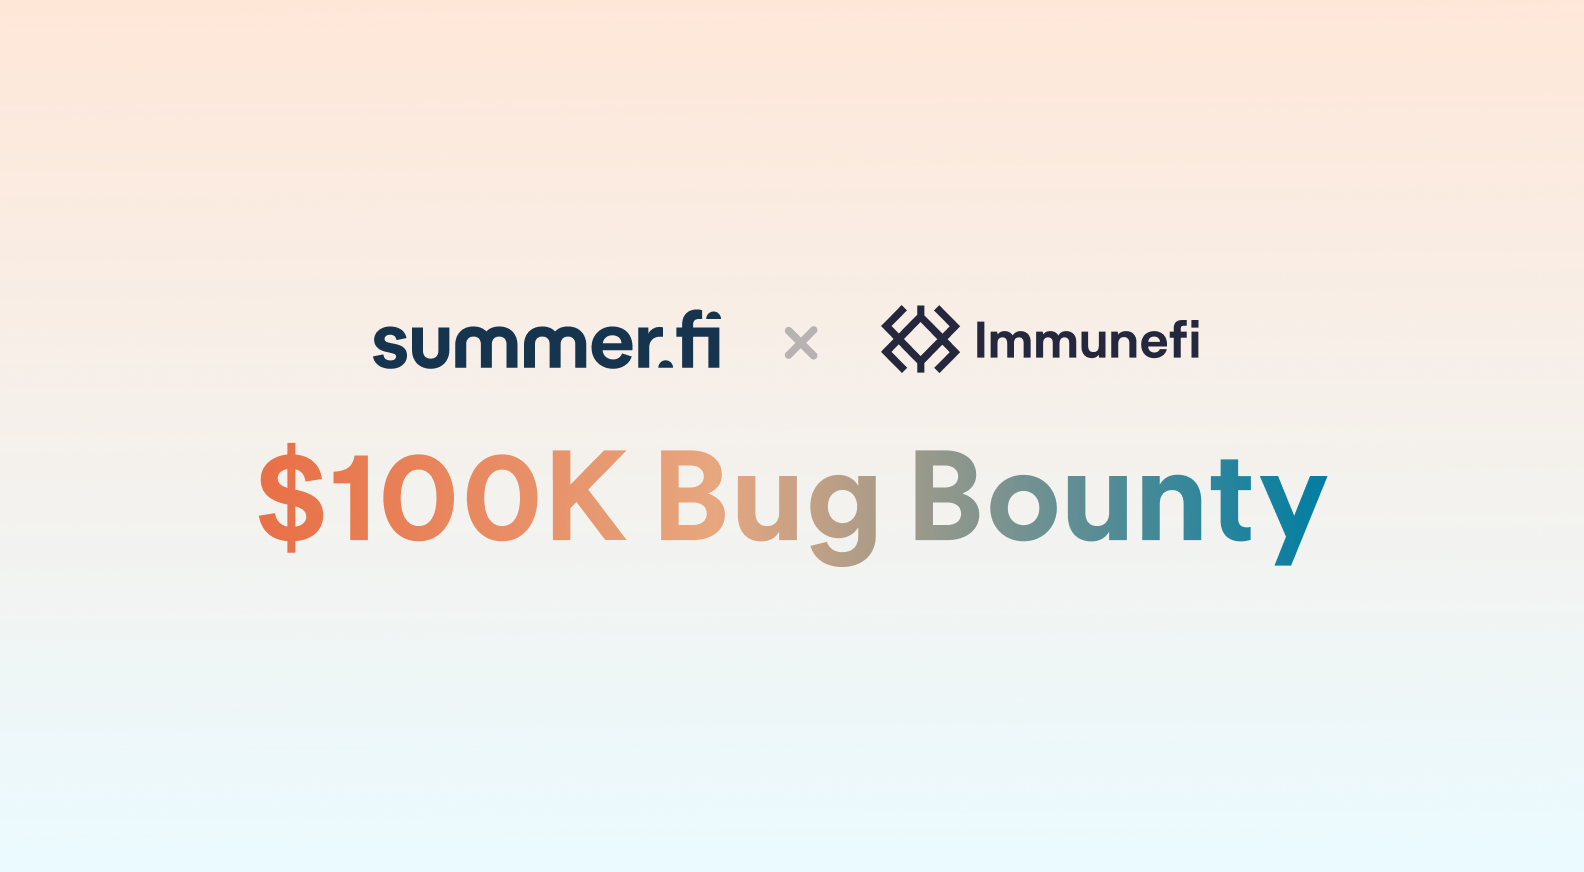 Summer.fi 100k Bug Bounty Program In Partnership With Immunefi